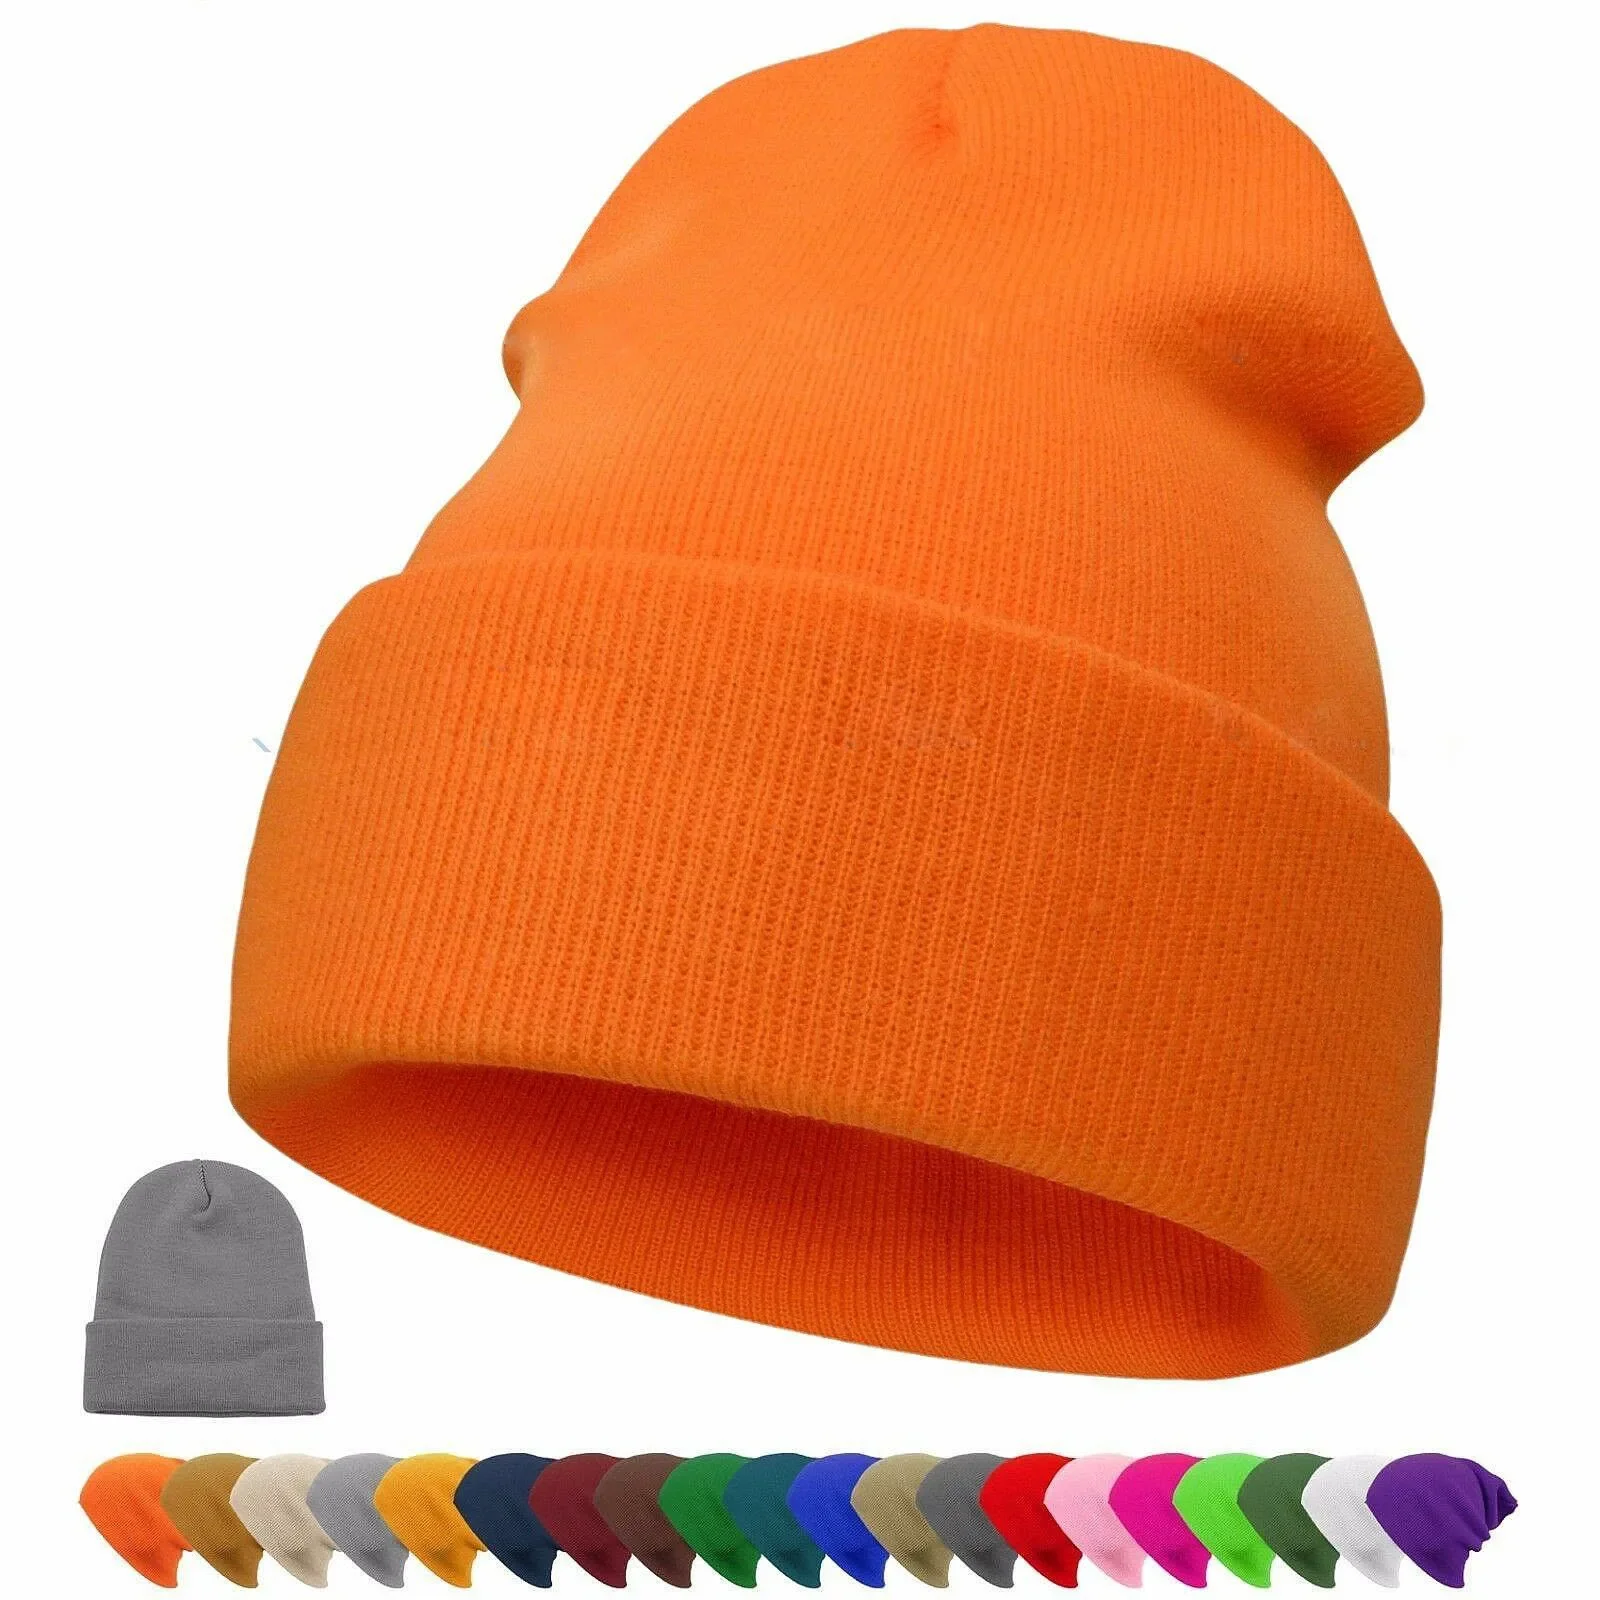 

Hats Beanie Plain Knitted Hat Autumn Winter Warm Ski Cuff Cap Wool Blends Soft Slouchy Skull Caps Beanies Men Women